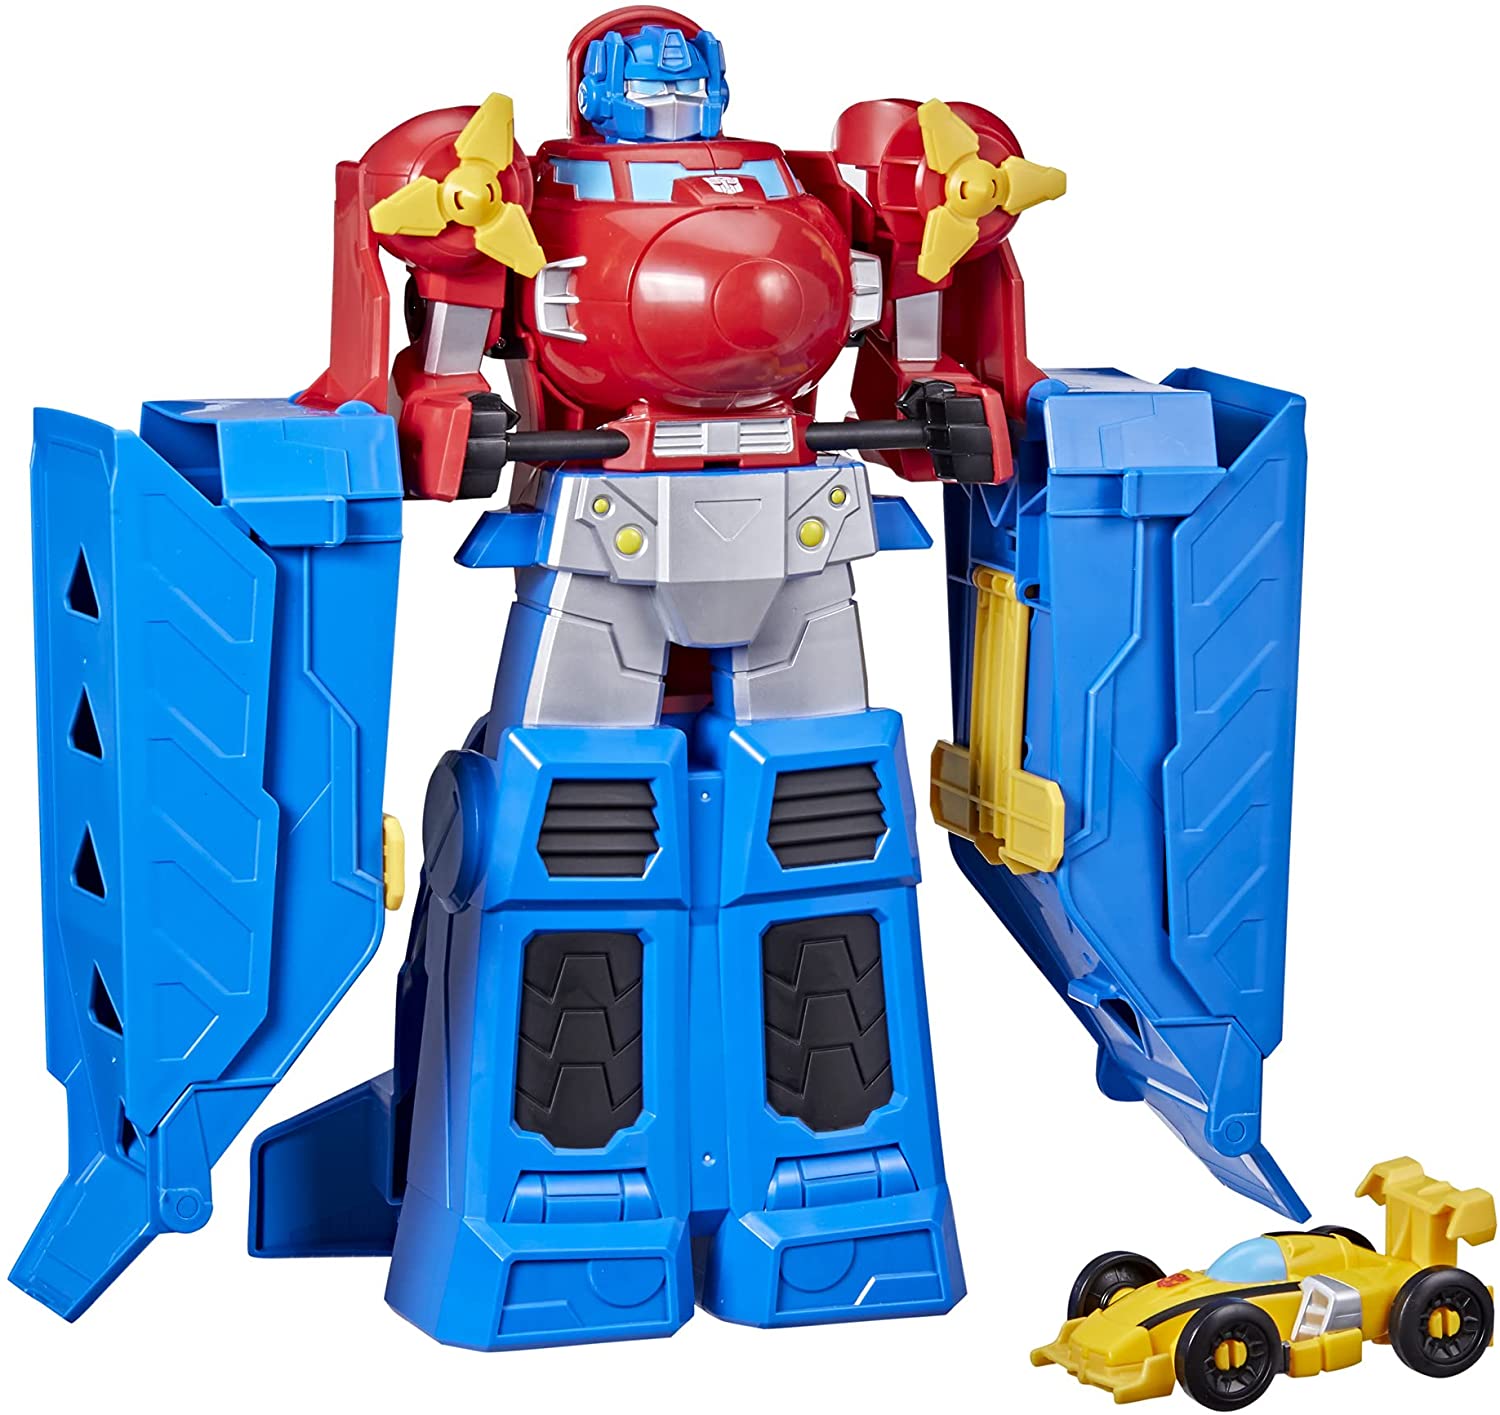 15" Transformers Optimus Prime Jumbo Jet Wing Racer Playset w/ 4.5" Bumblebee Racecar Figure $26.92 + Free Shipping